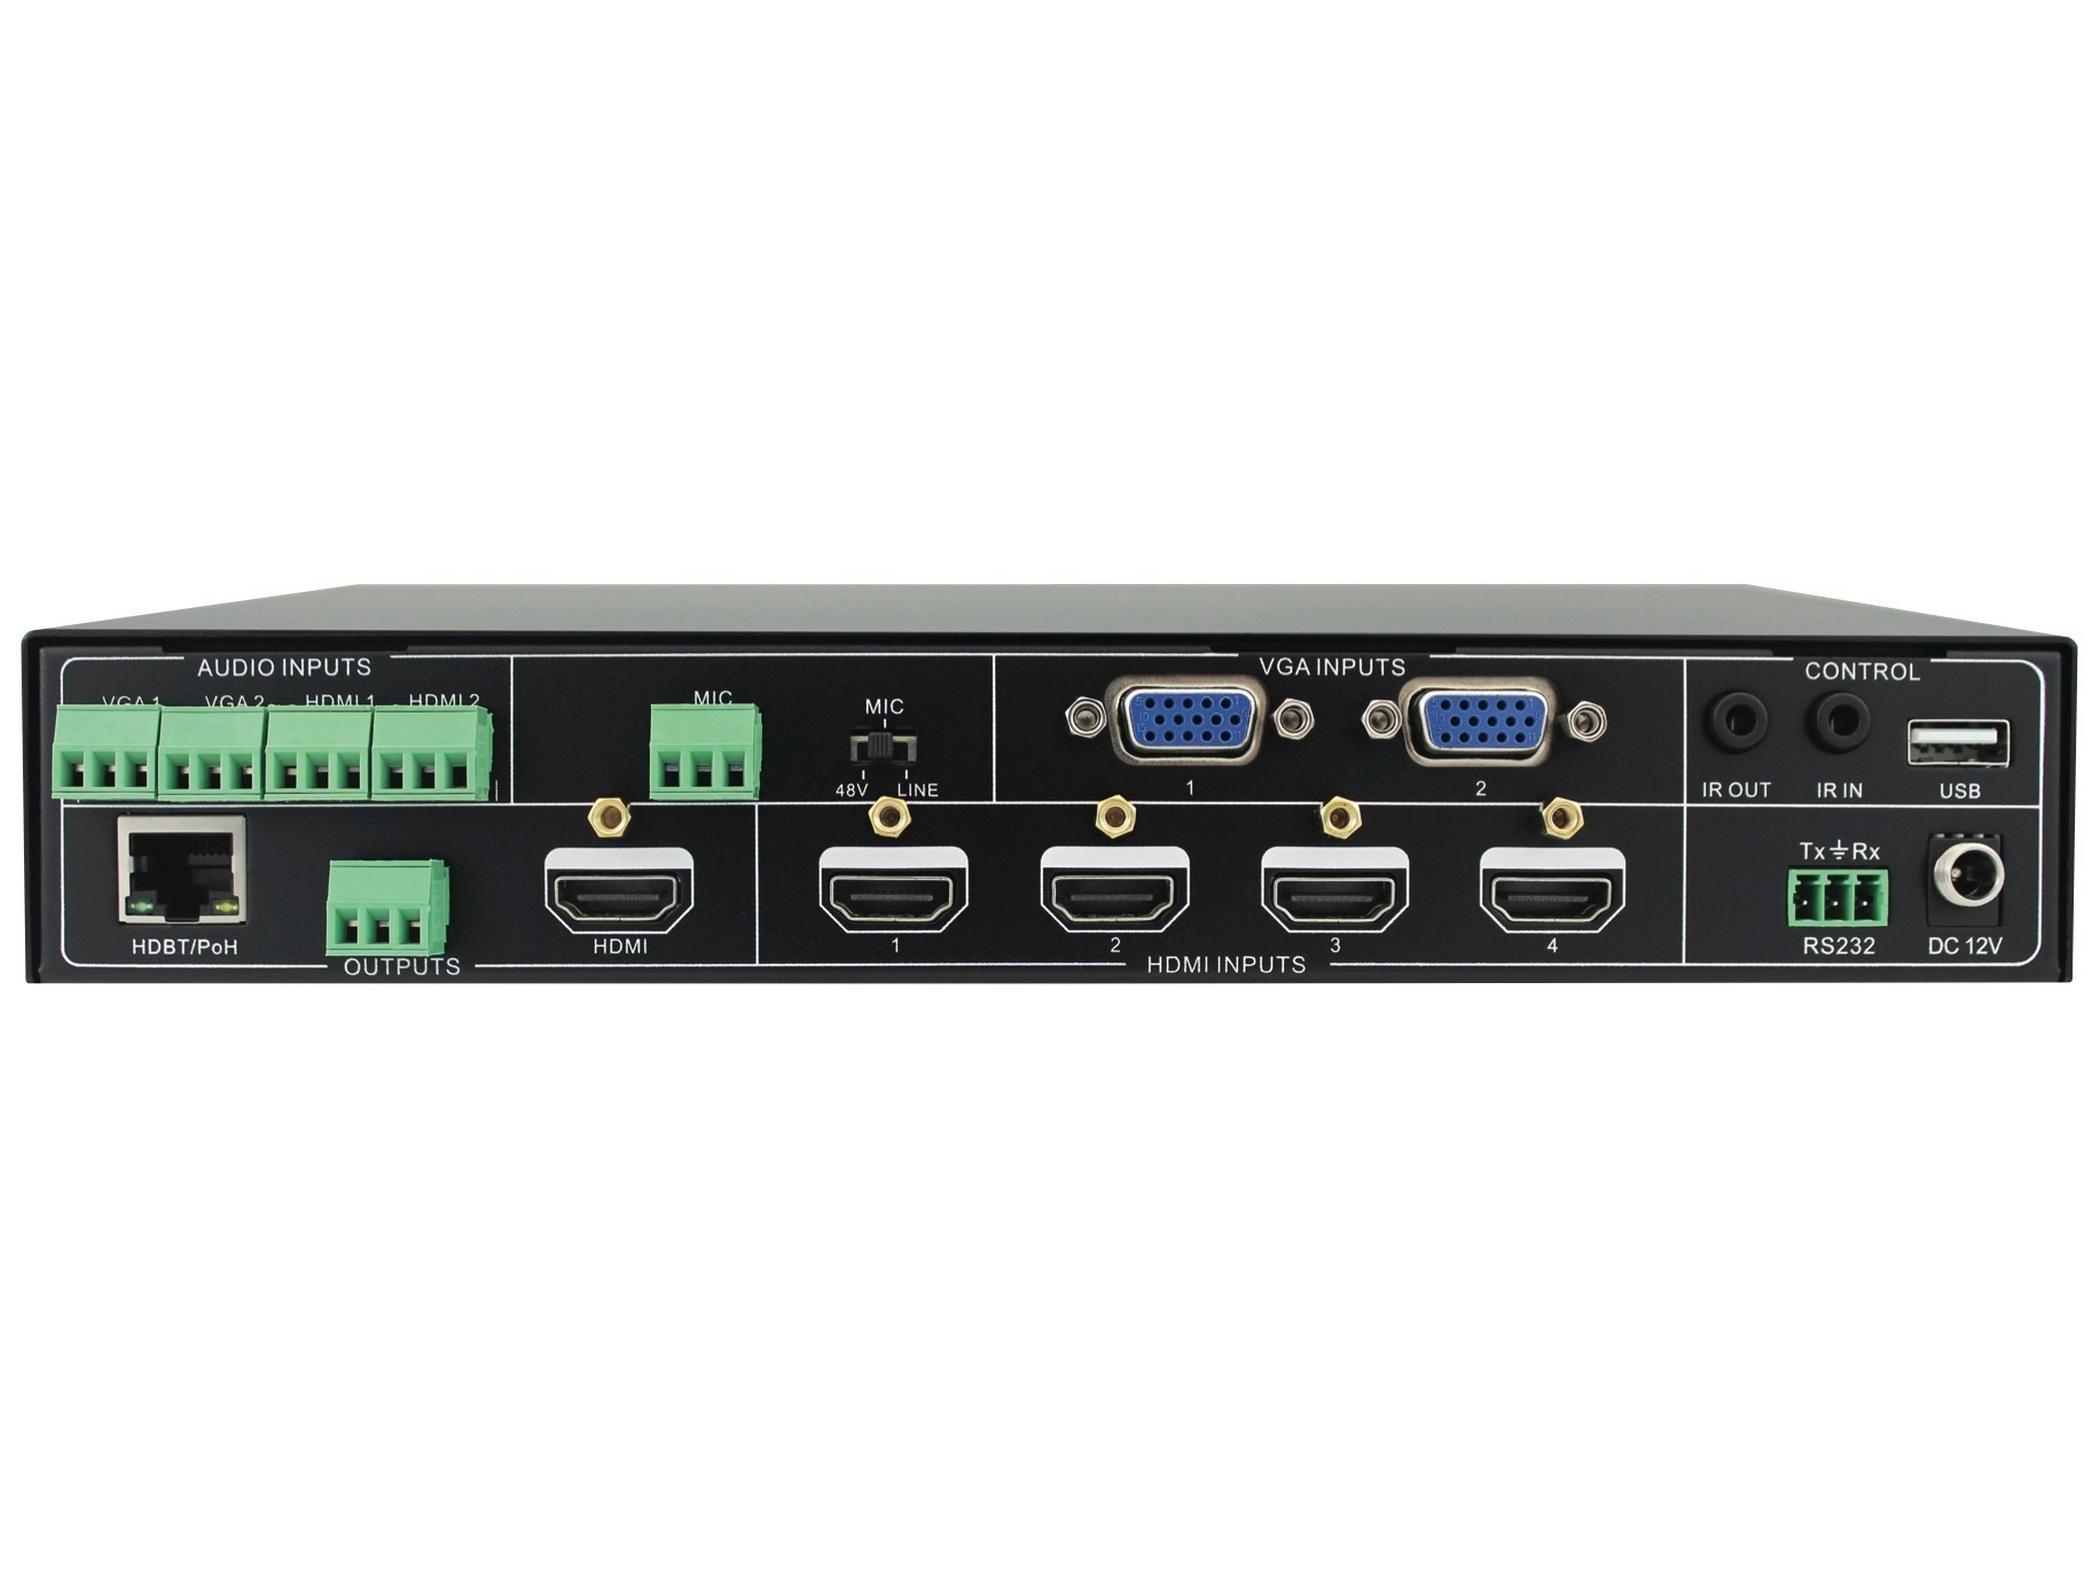 DXP-62 HDMI/VGA/Component/Composite Presentation Scaler/Switcher by Aurora Multimedia